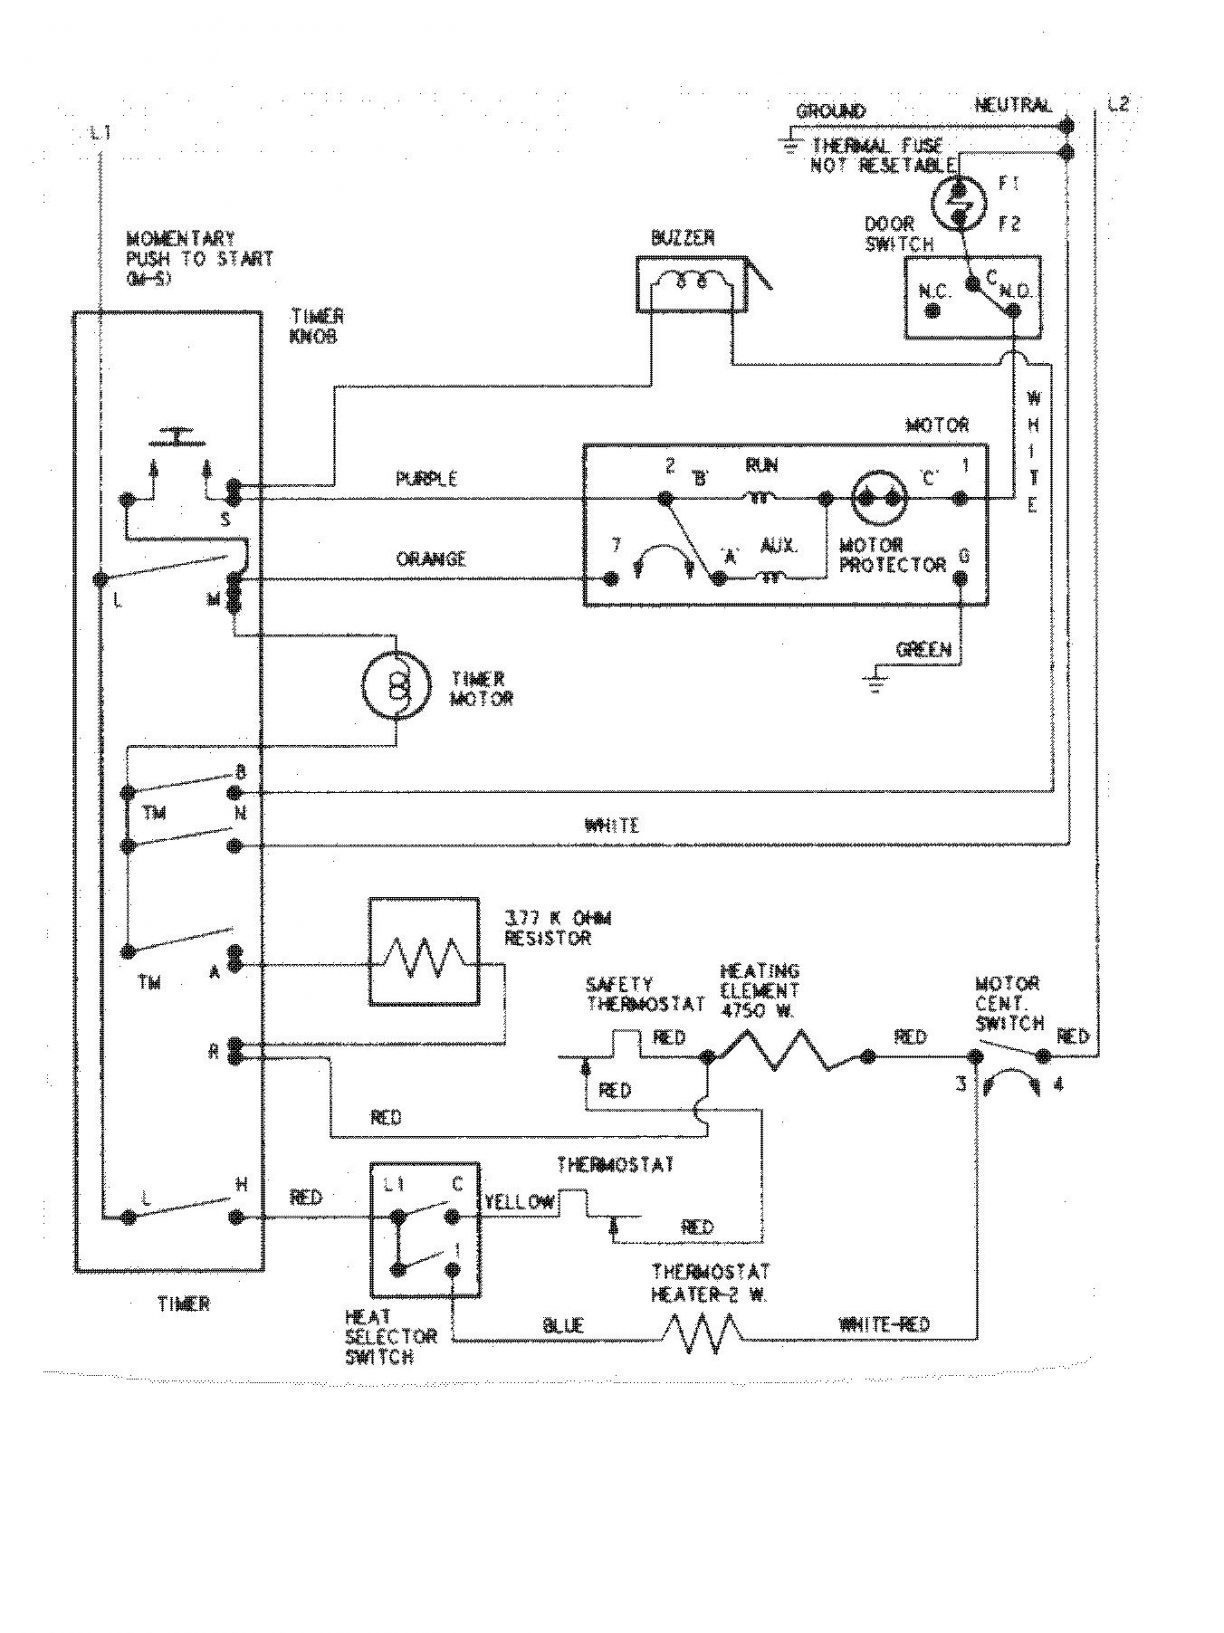 Wiring Diagram for Maytag Dryer Ge Dryer Timer Switch Wiring Diagram Fresh Beautiful Maytag Dryer Of Wiring Diagram for Maytag Dryer